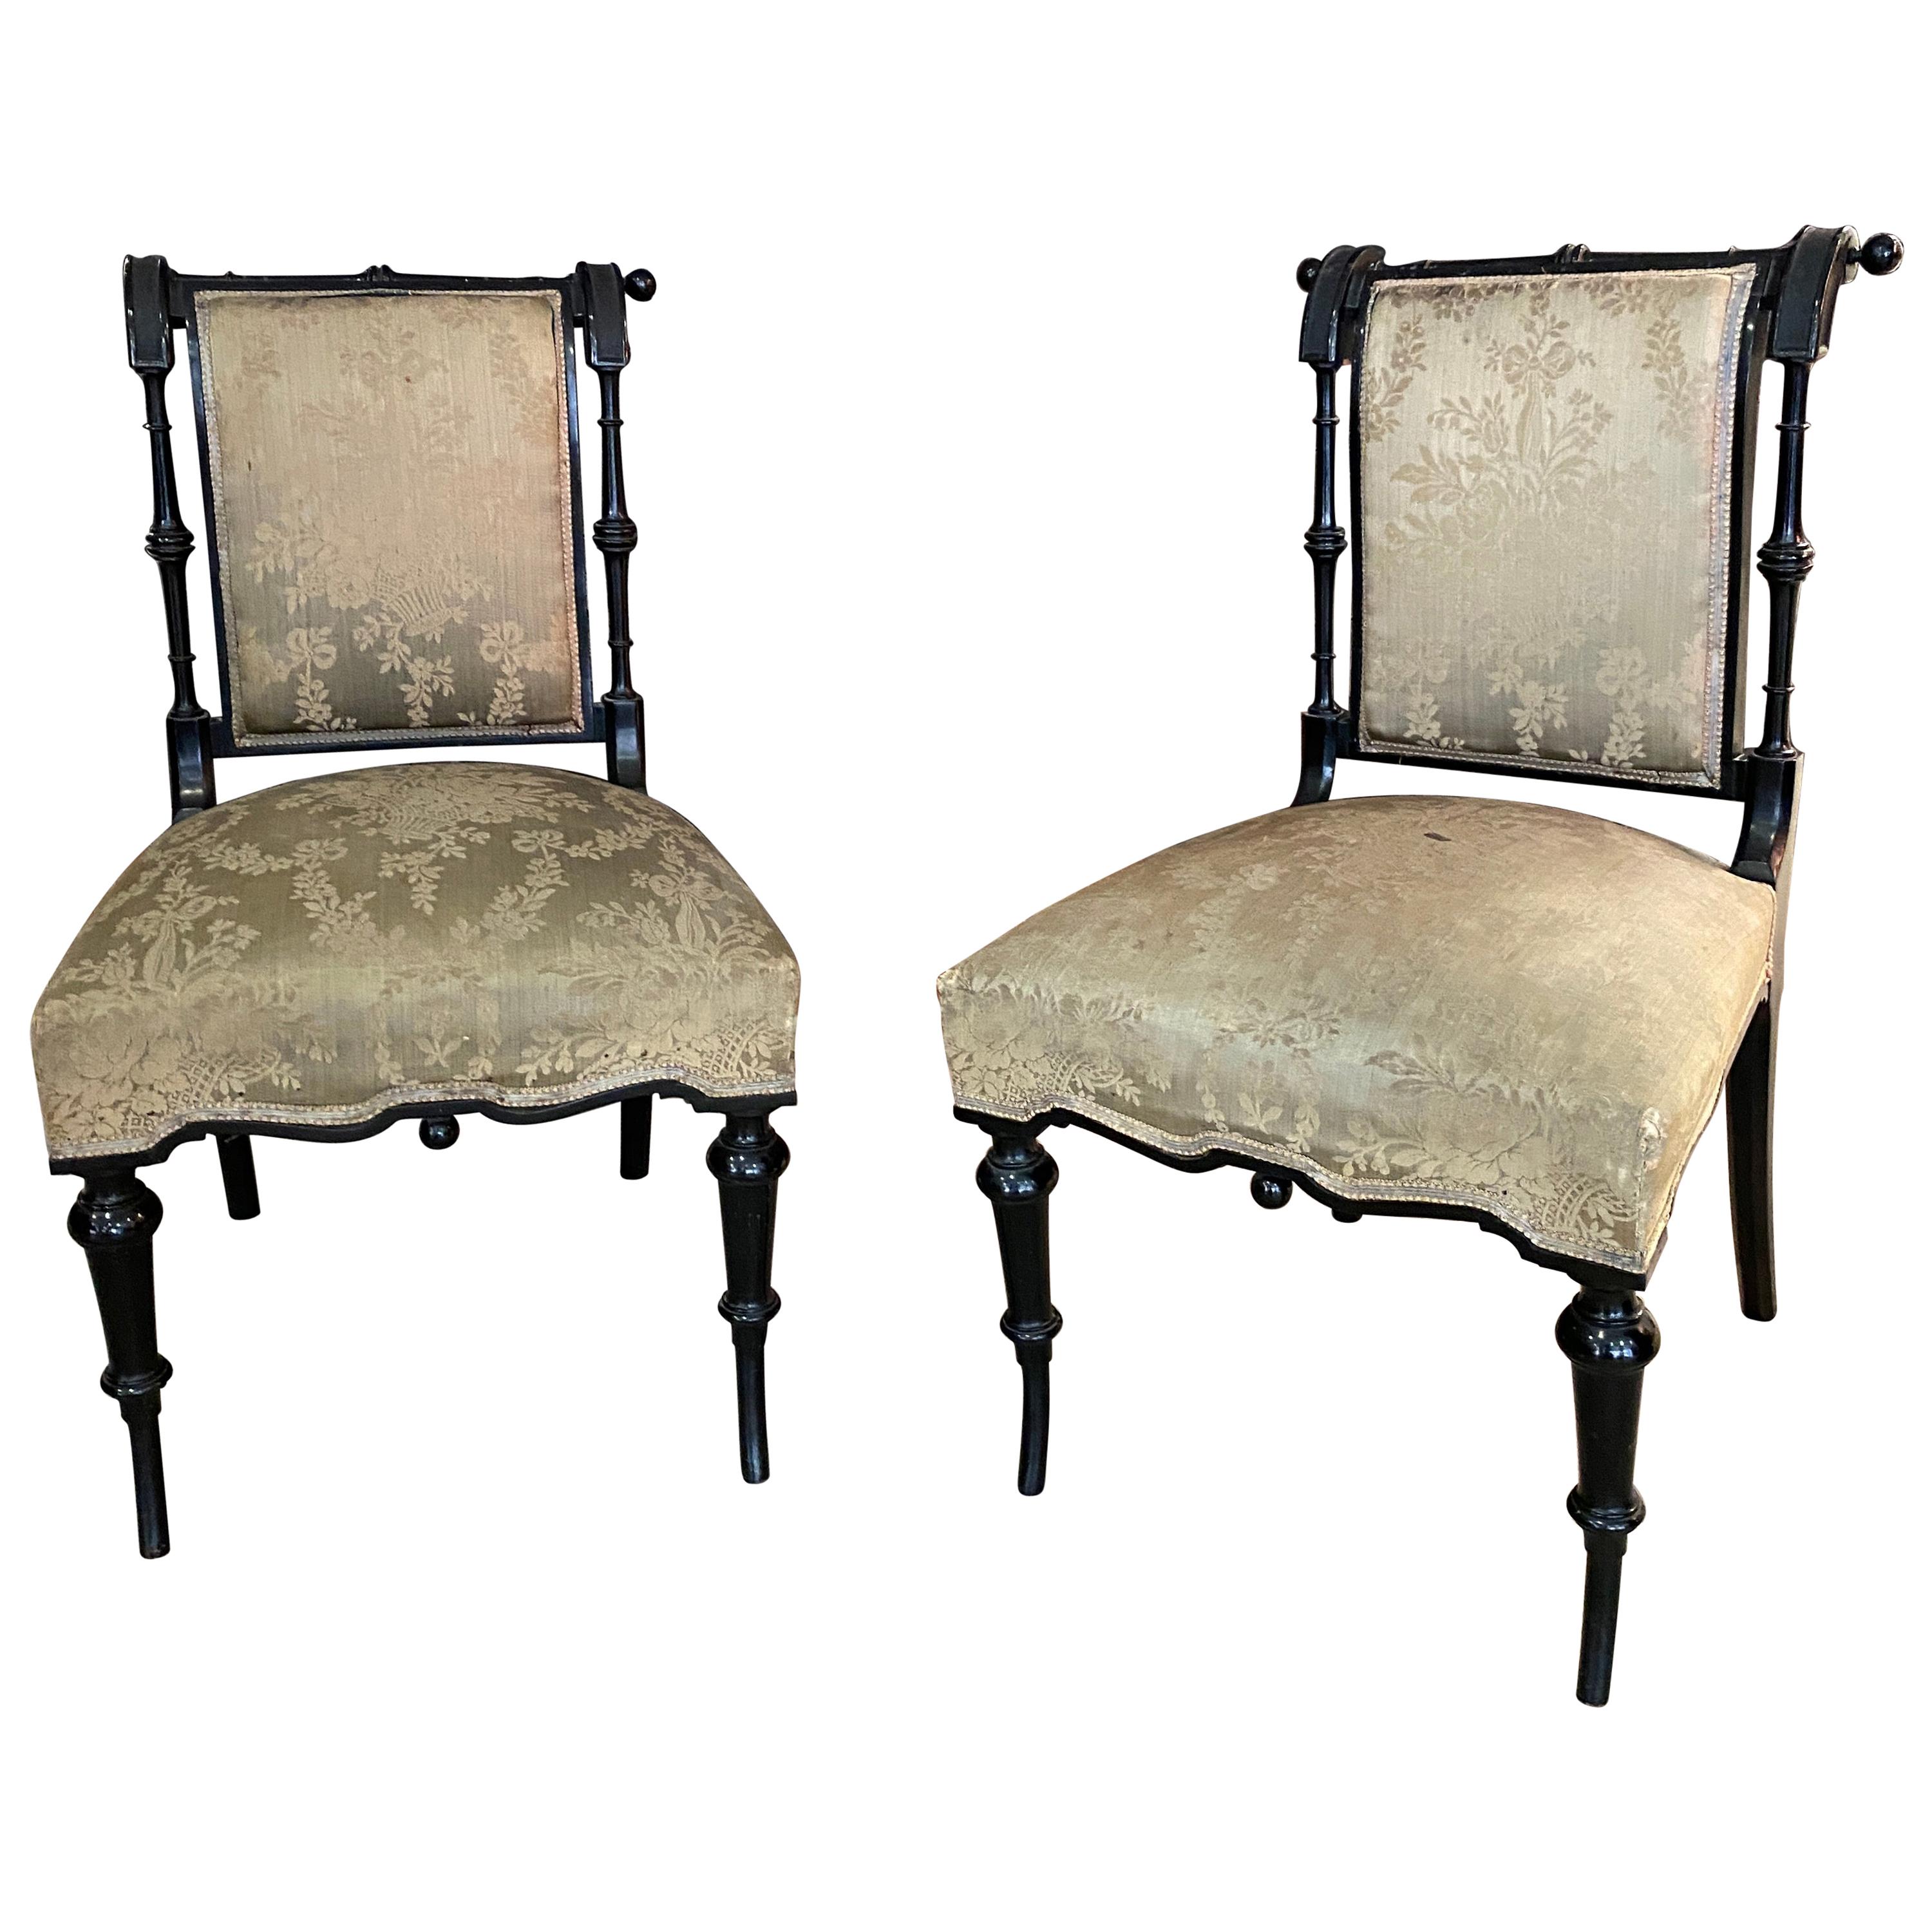 2 Original Napoleon III Ebonized Chairs, France, 1850s